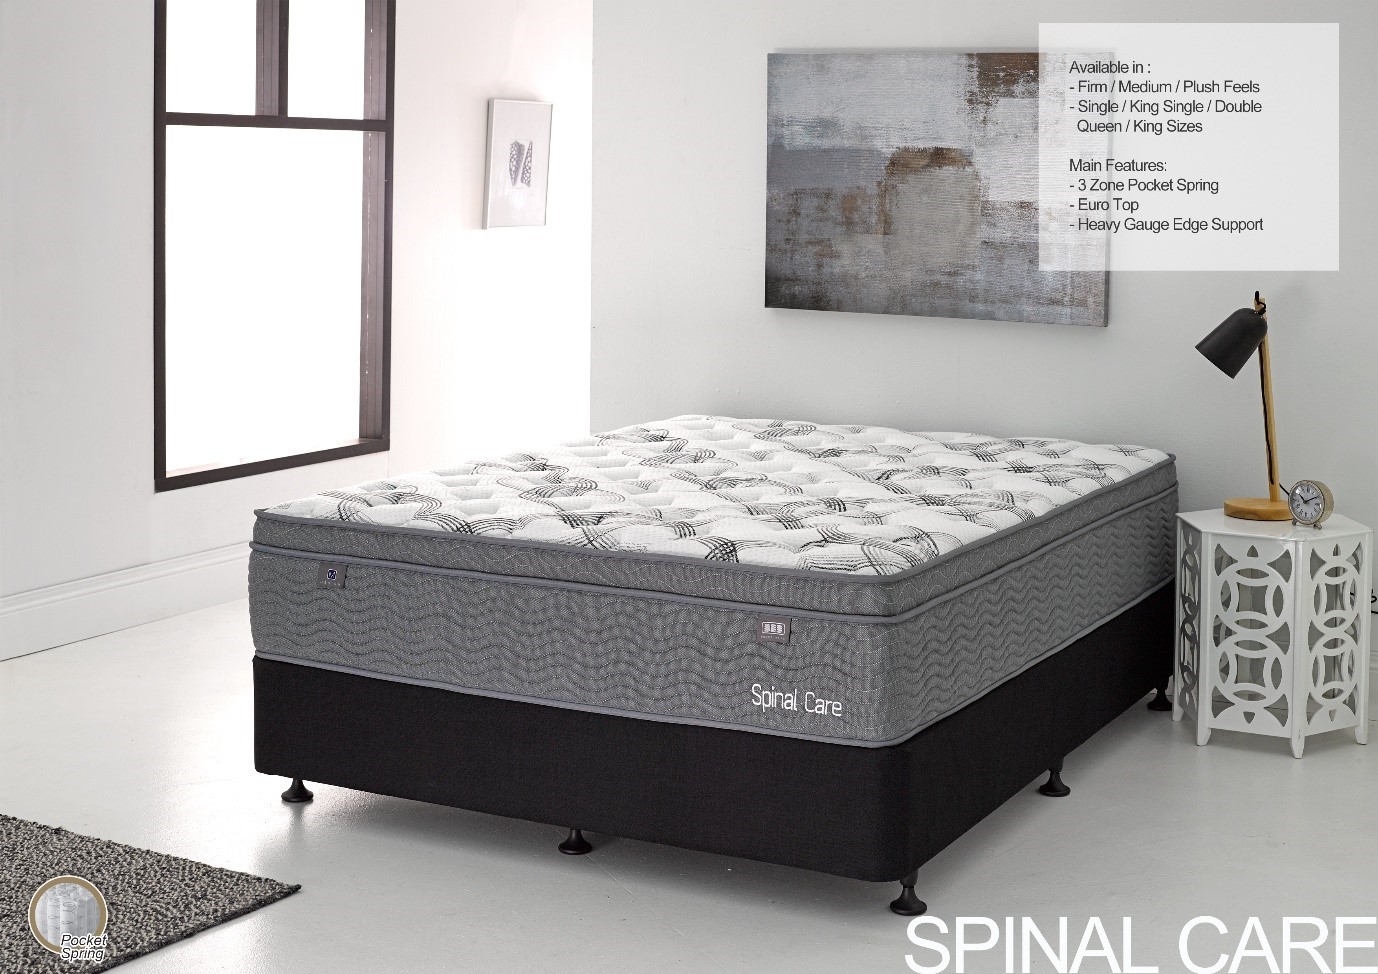 spinal care pillow top mattress